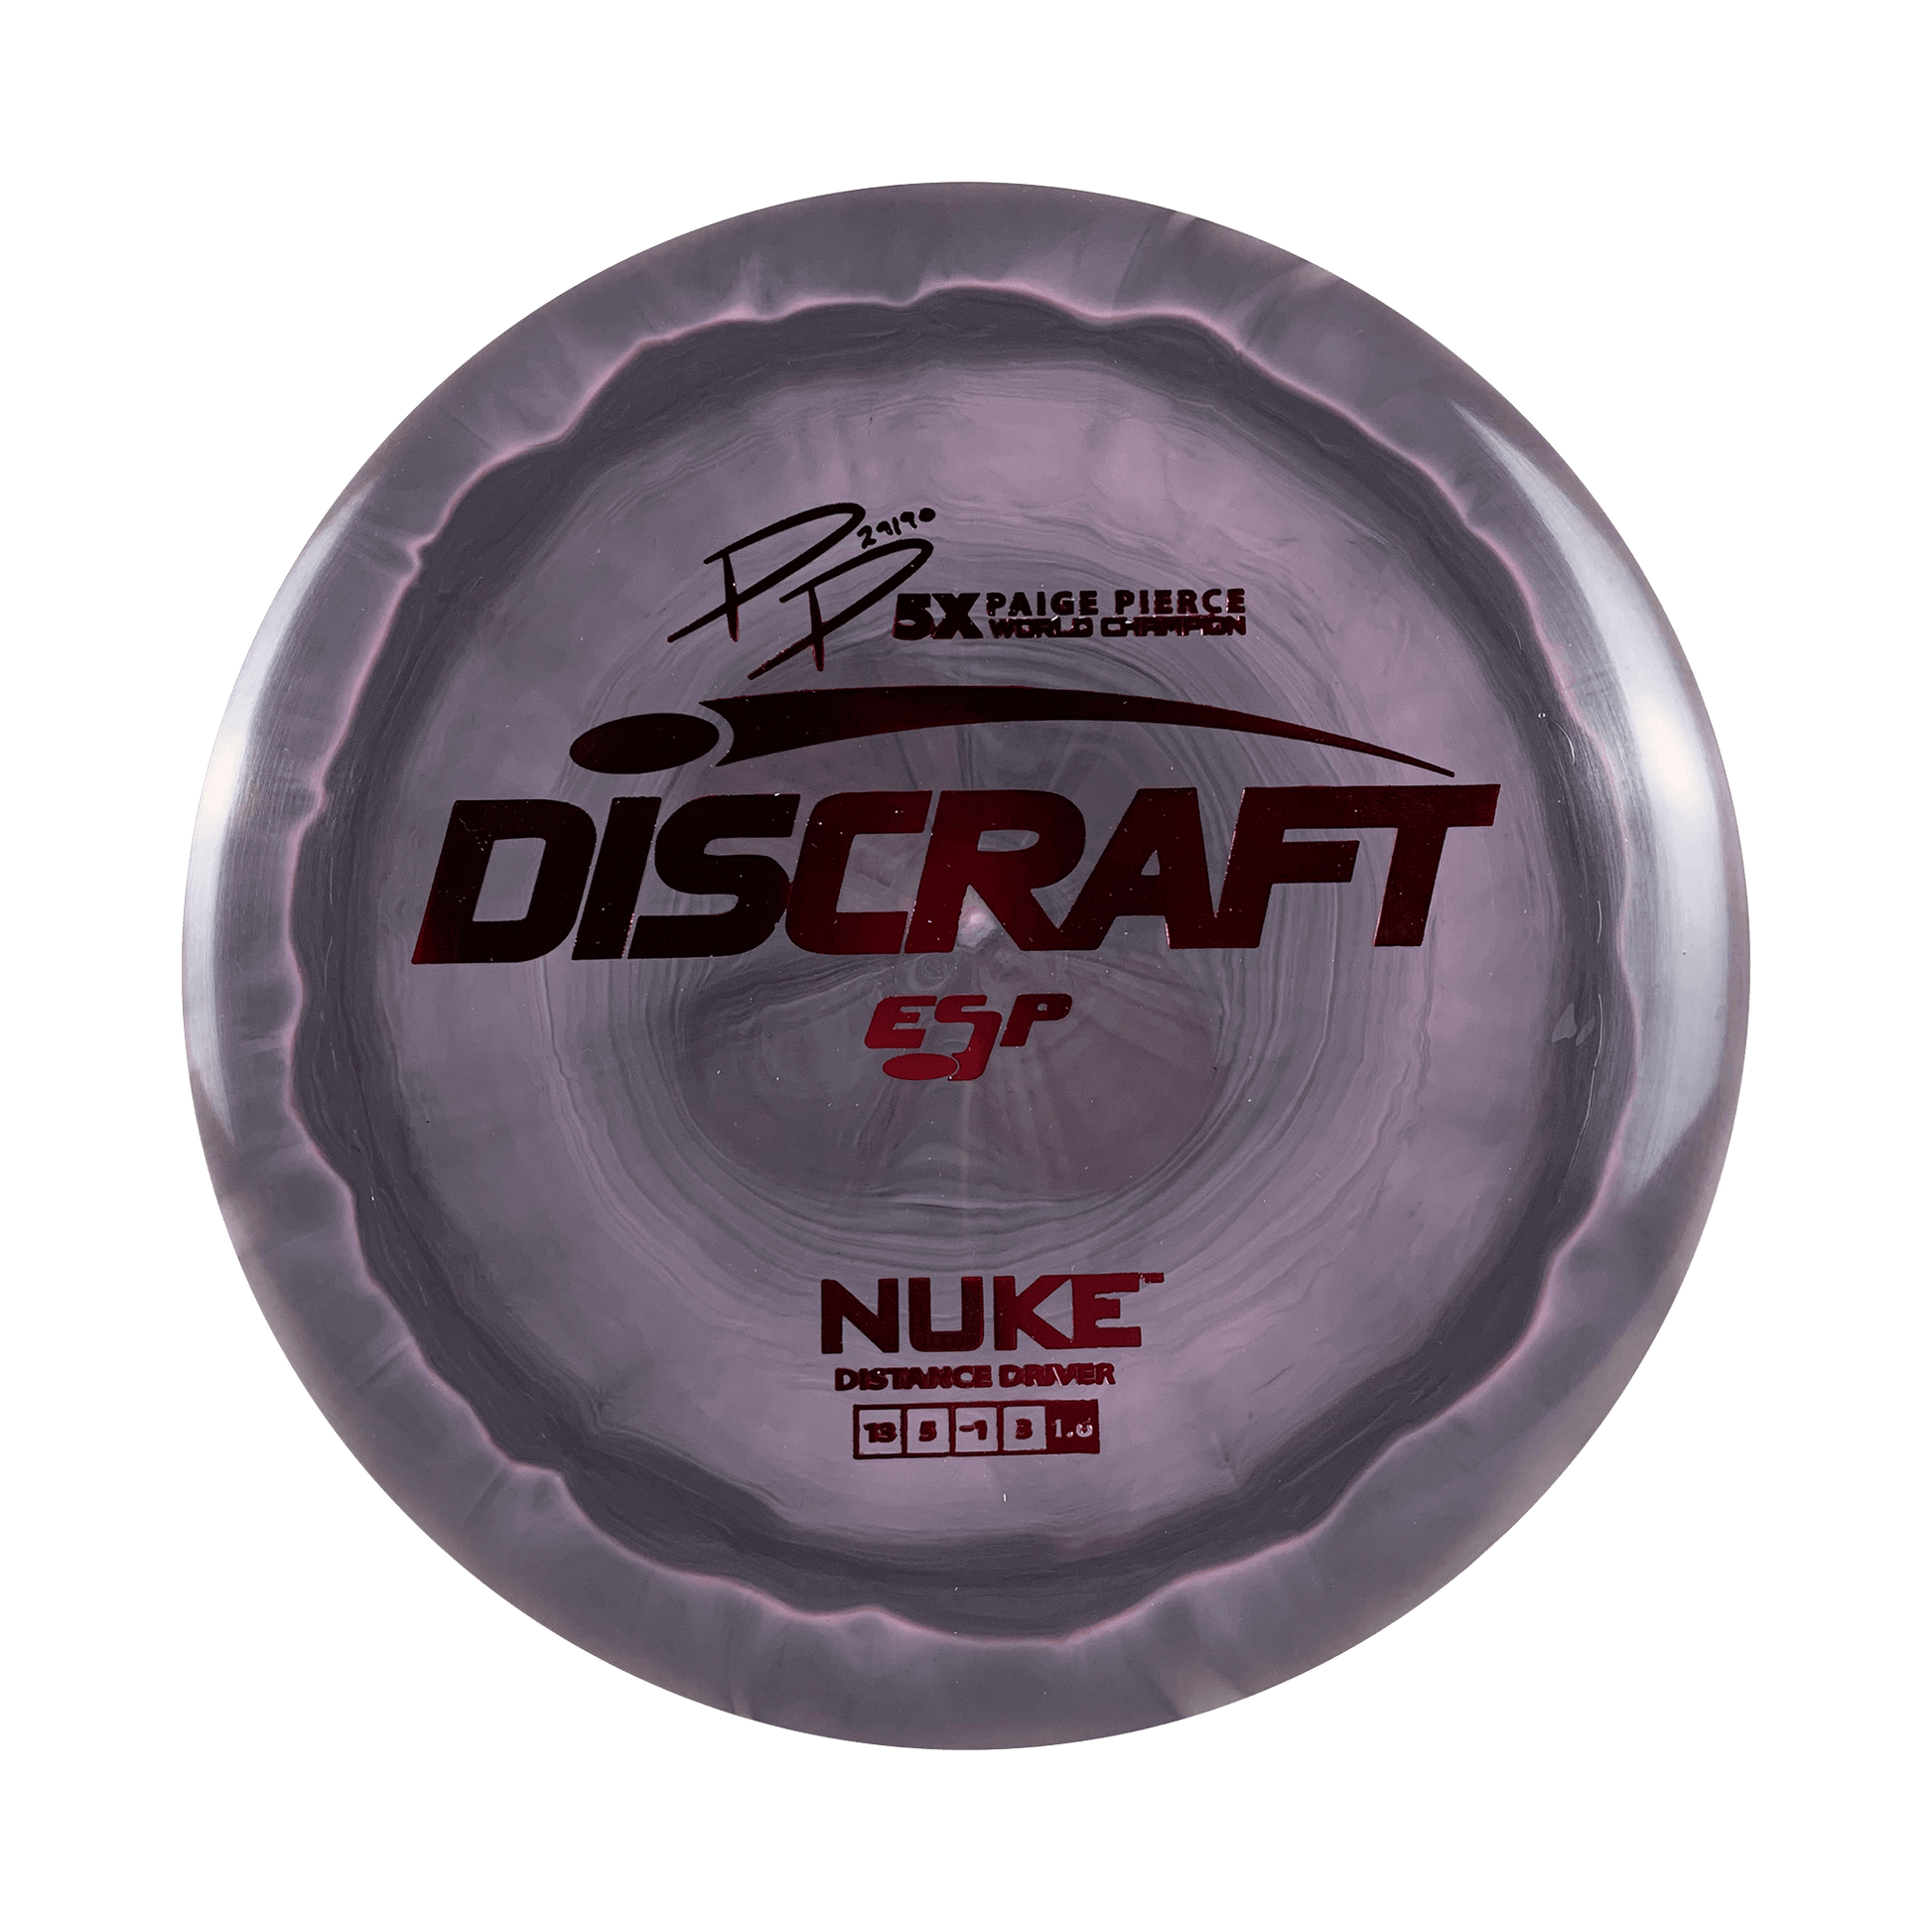 ESP Nuke - Paige Pierce Signature Series Disc Discraft multi / pink black 173 